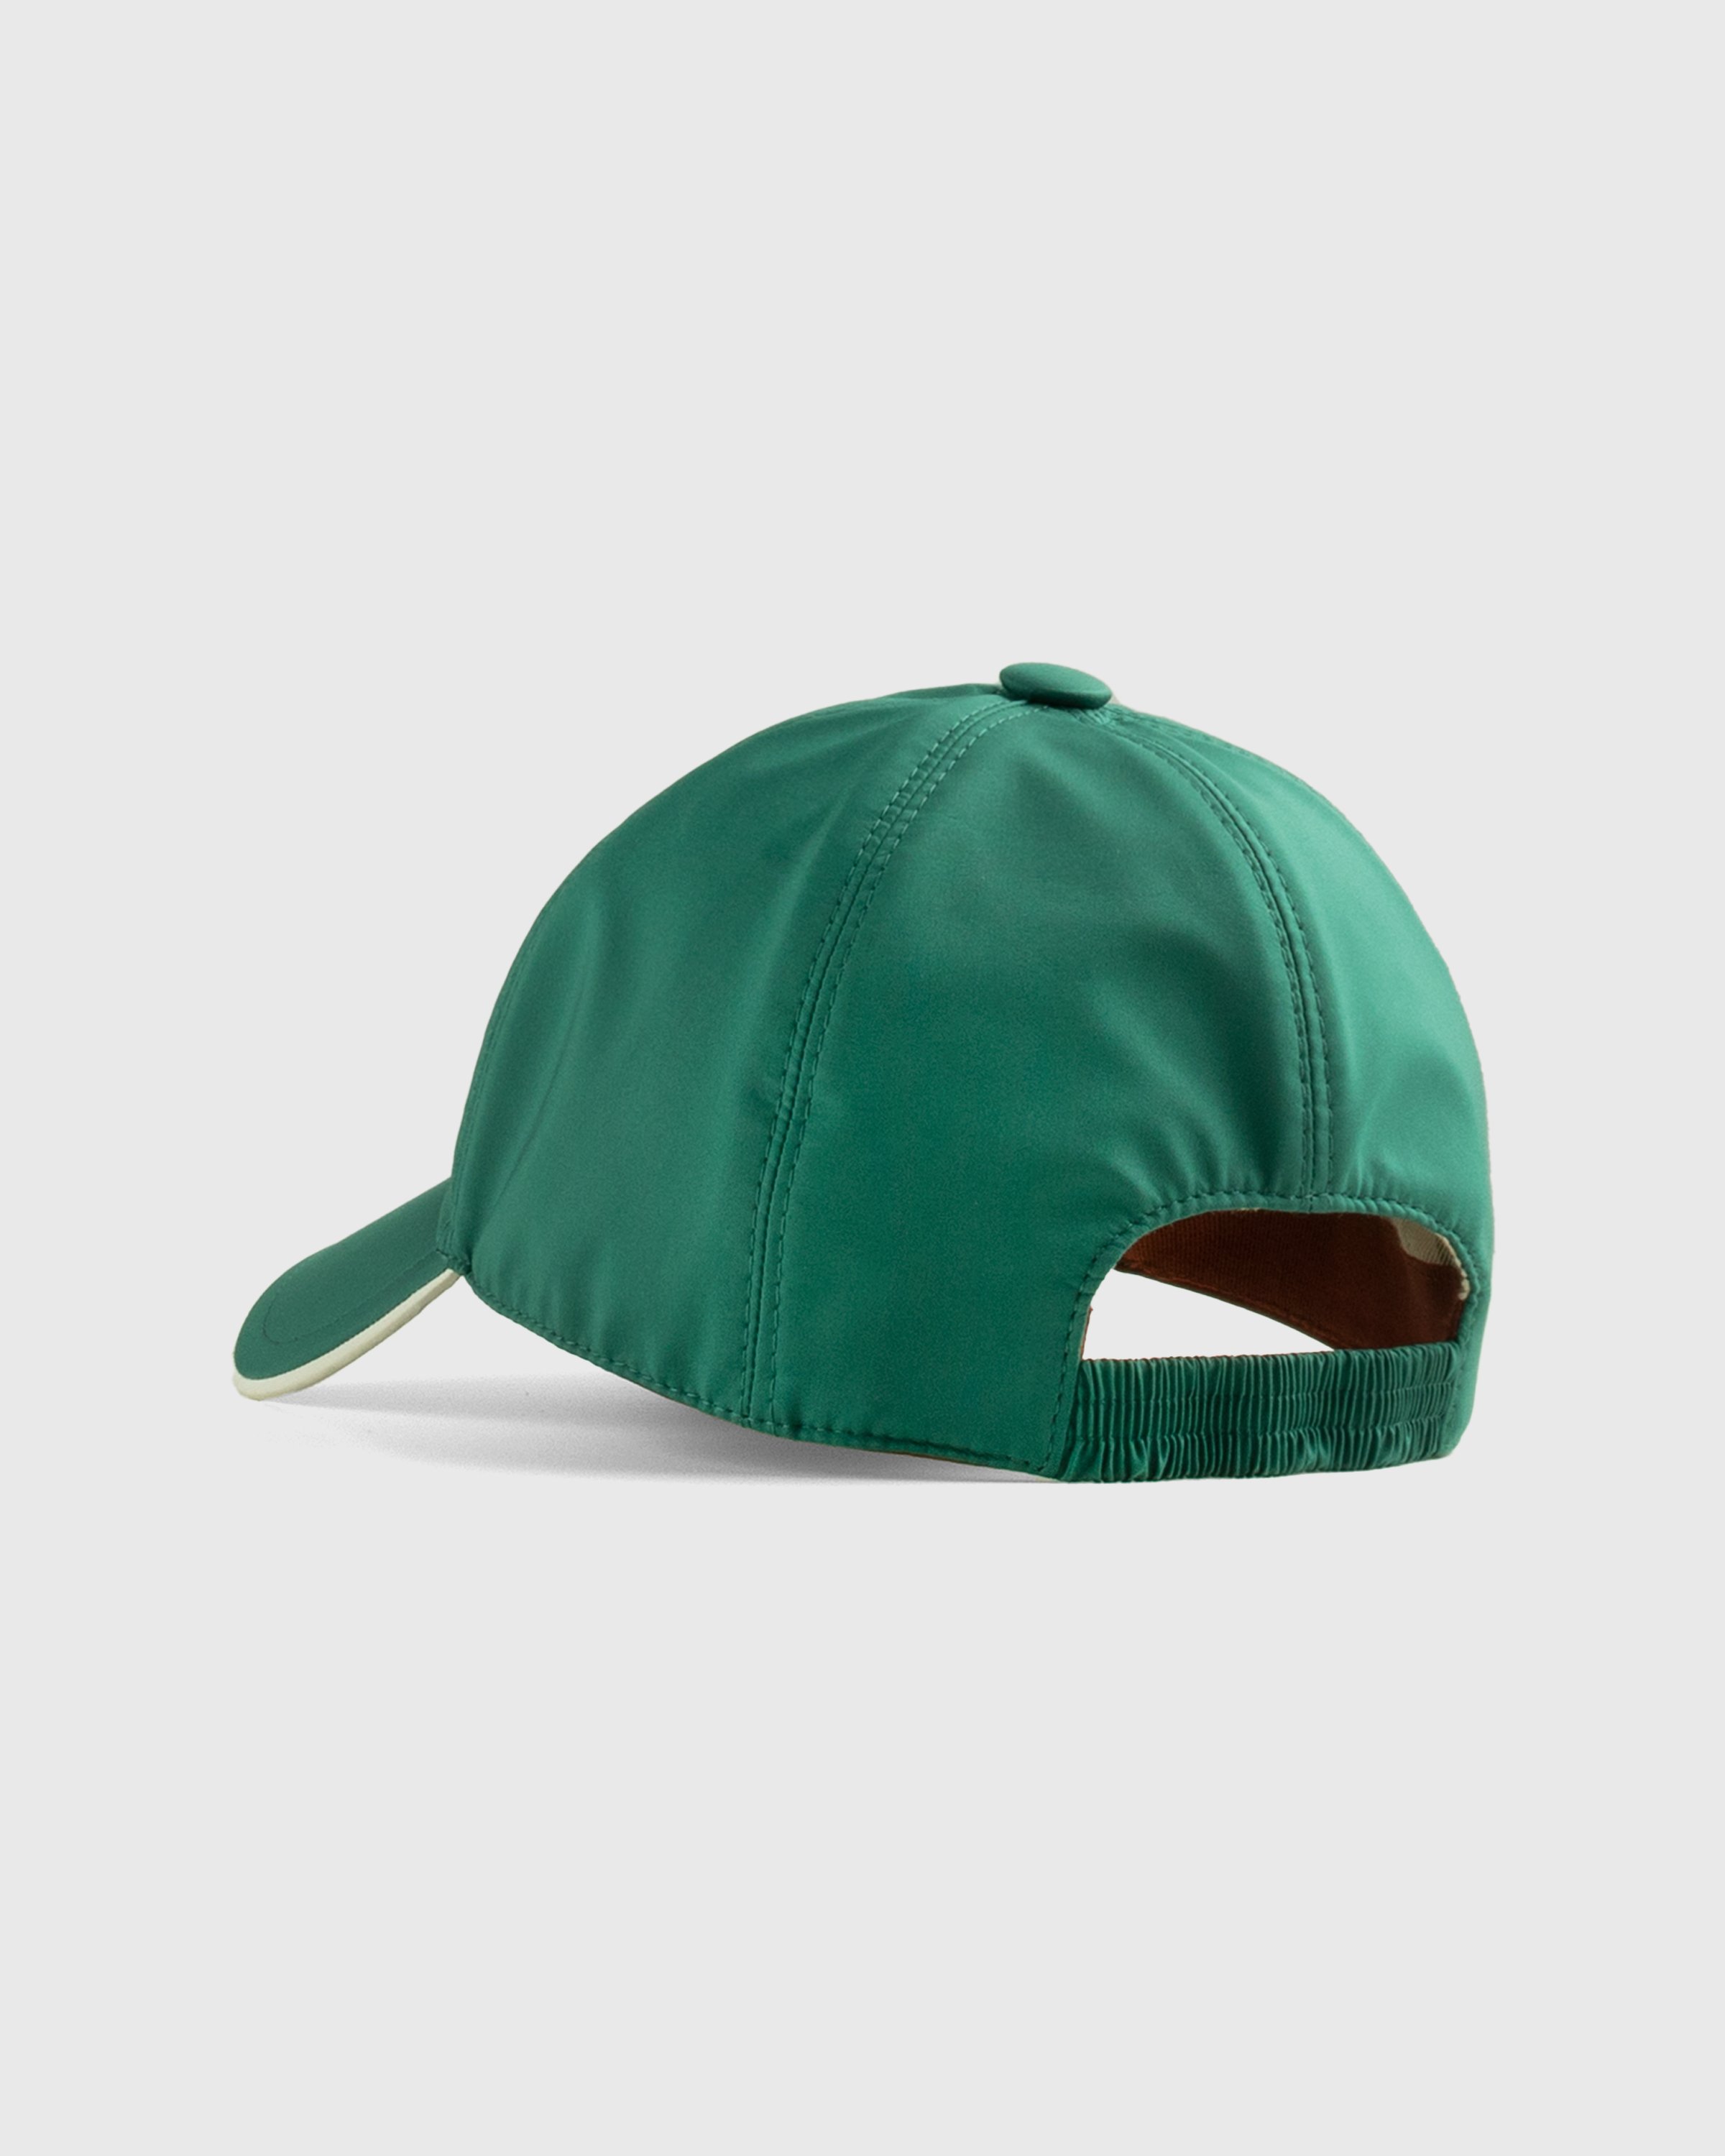 Loro Piana - Bicolor Baseball Cap Green Mint / Ivory - Accessories - Green - Image 3